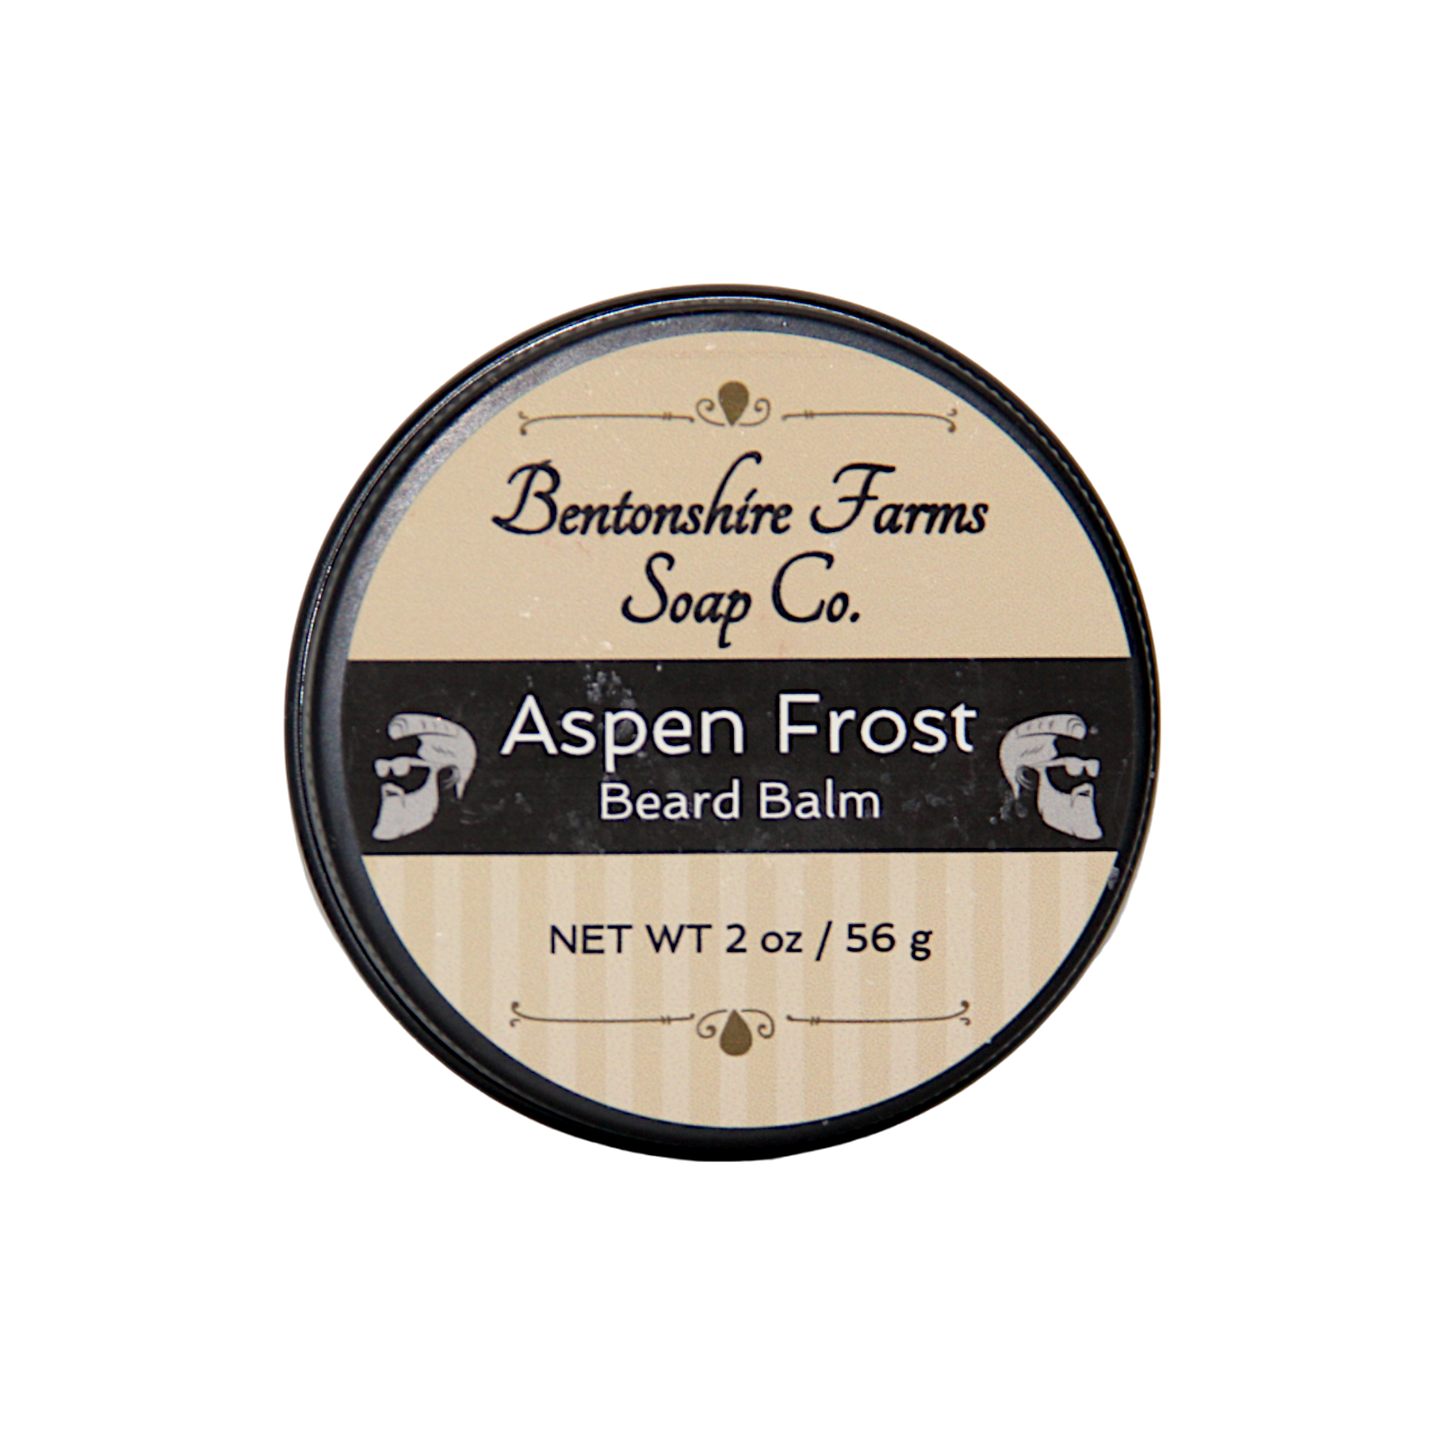 Aspen Frost Beard Balm